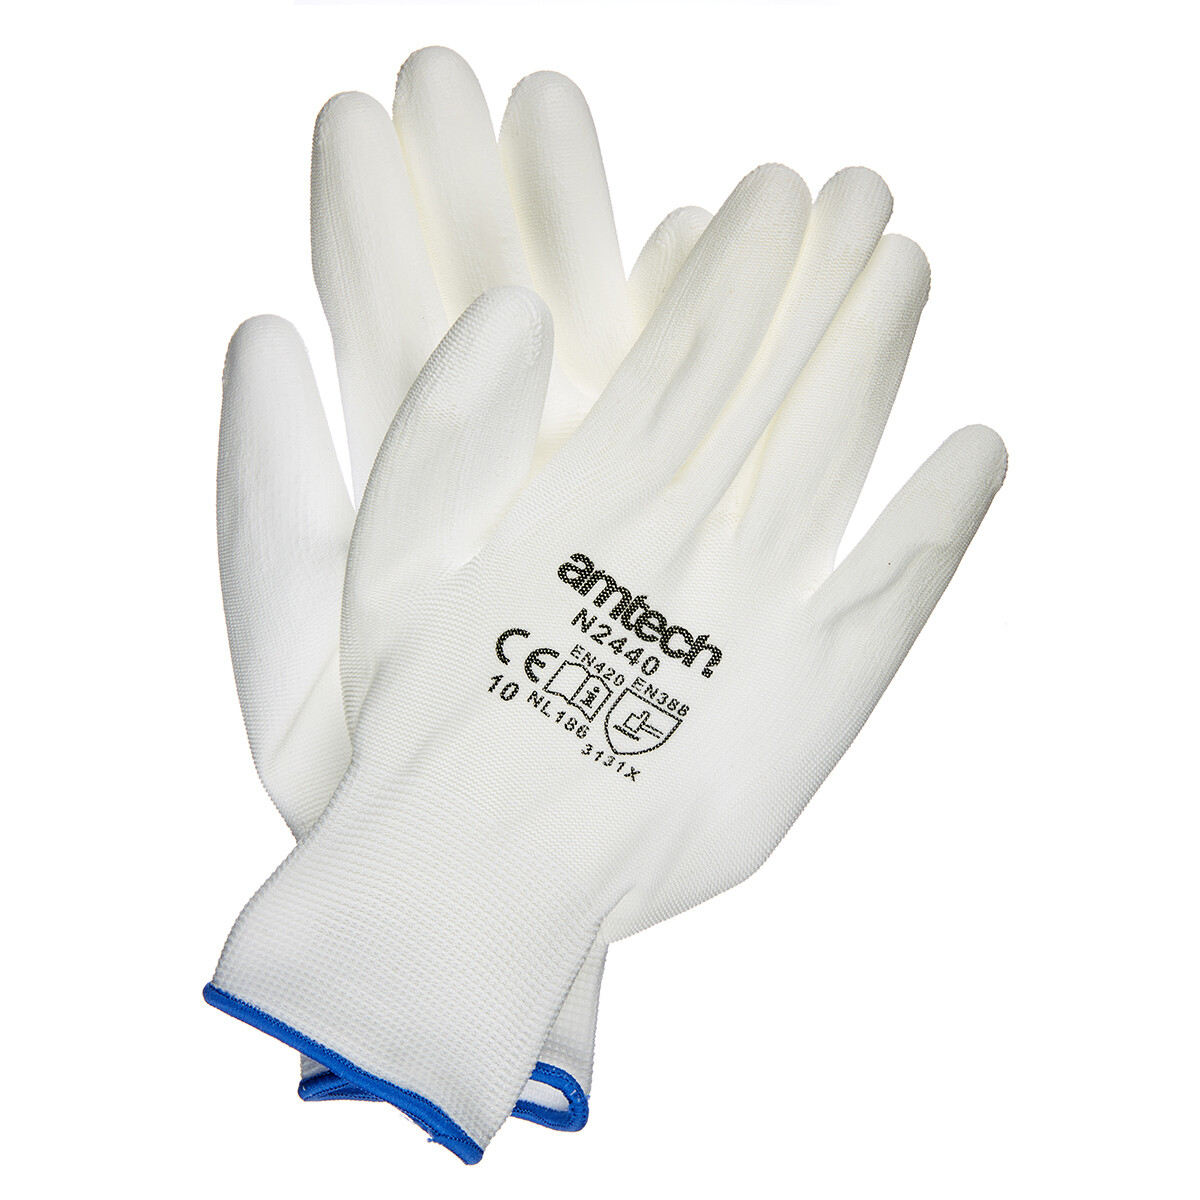 light duty PU coated work gloves white XL (size 10)